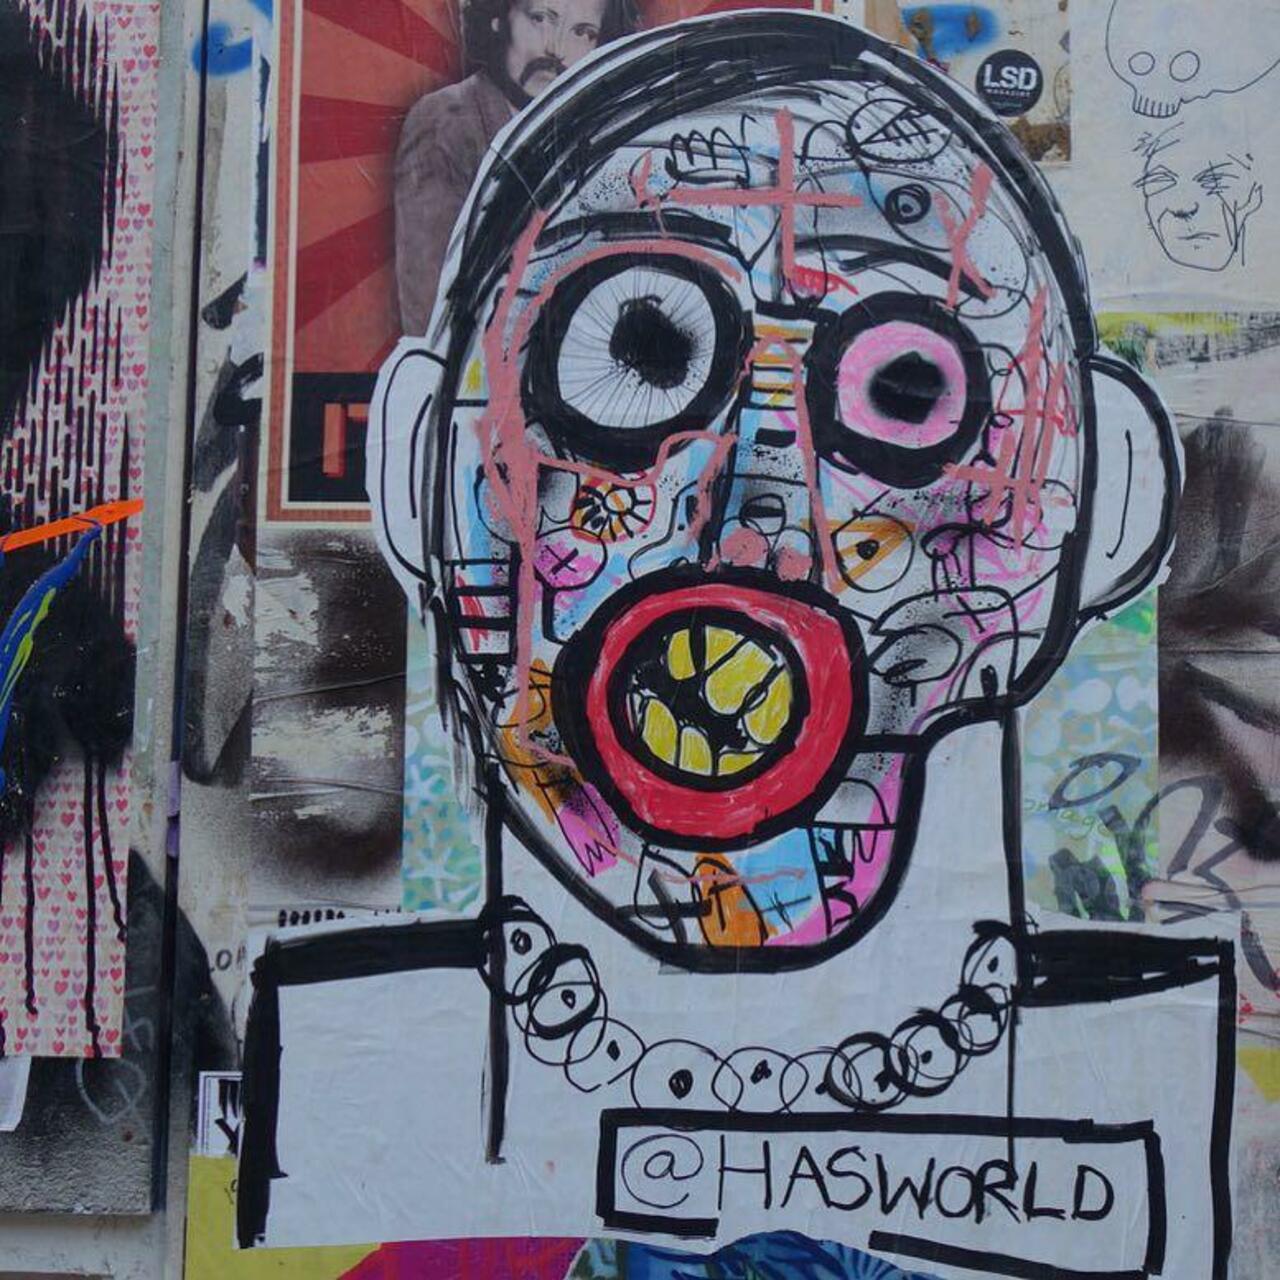 Who else but @hasworld 
#streetart #streetartlondon #urbanart #streetphotography #murals #art #graffiti #graff #gra… http://t.co/TH1ILE8ngm